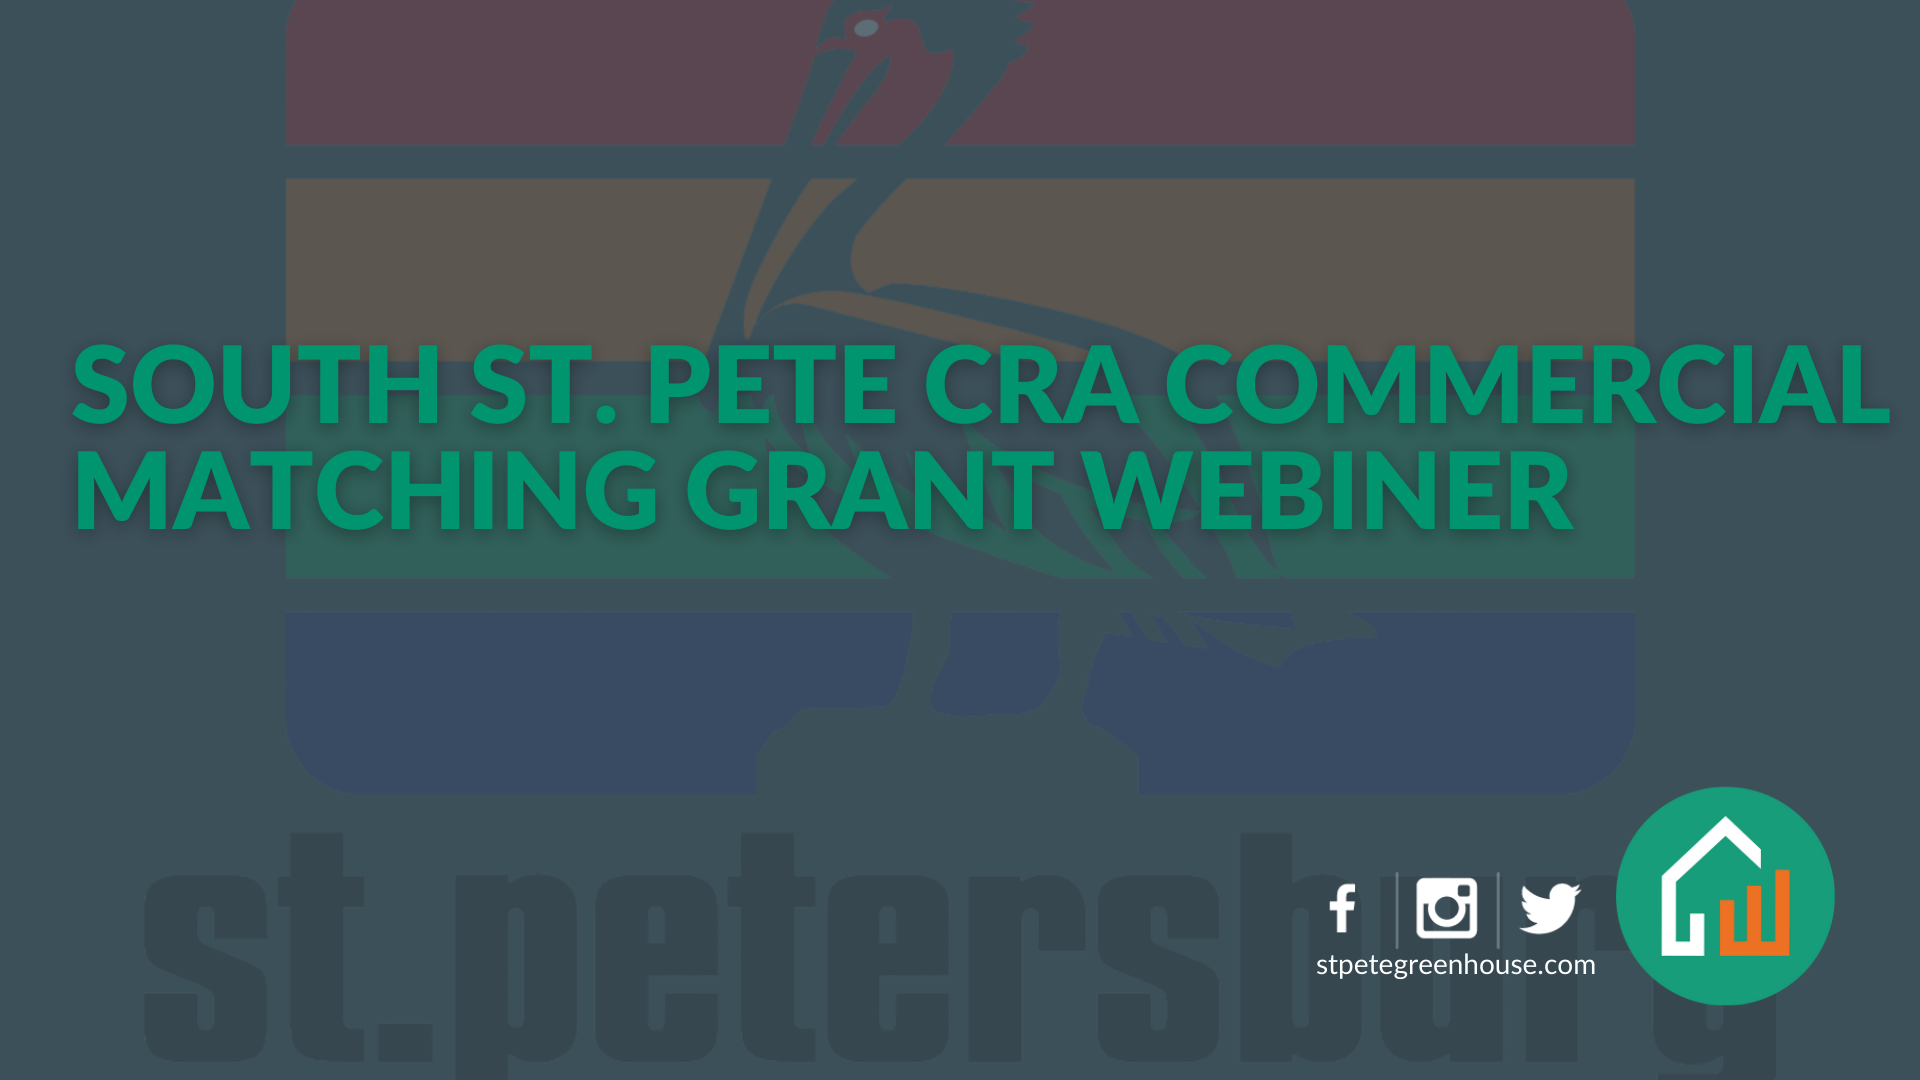 South St. Pete CRA Commercial Match Grant Webinar-image